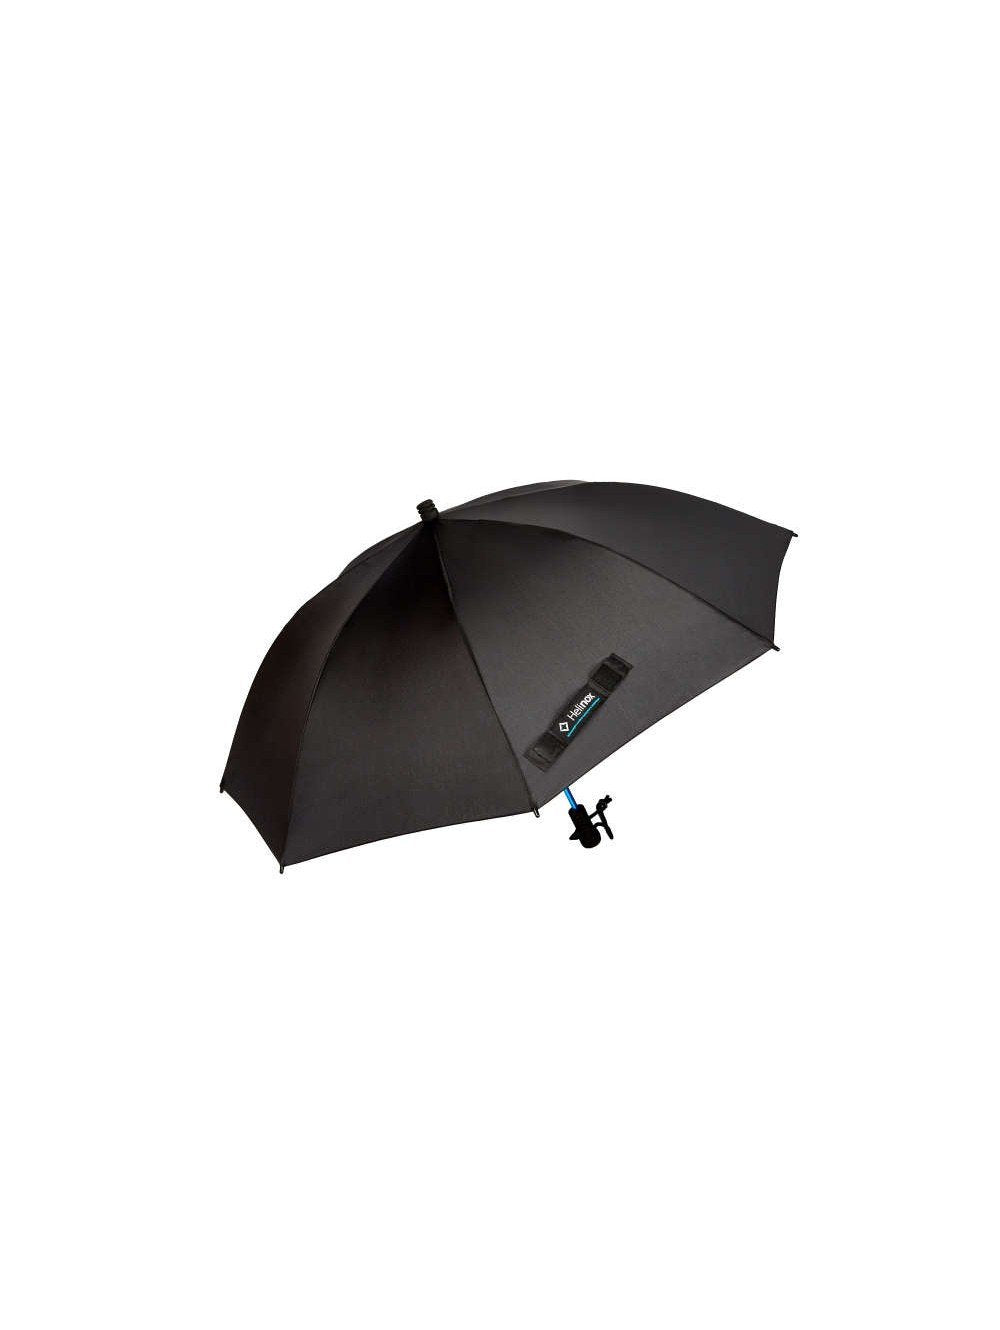 Helinox Umbrella One Outdoor and Survival Products Helinox Tan Tactical Gear Supplier Tactical Distributors Australia